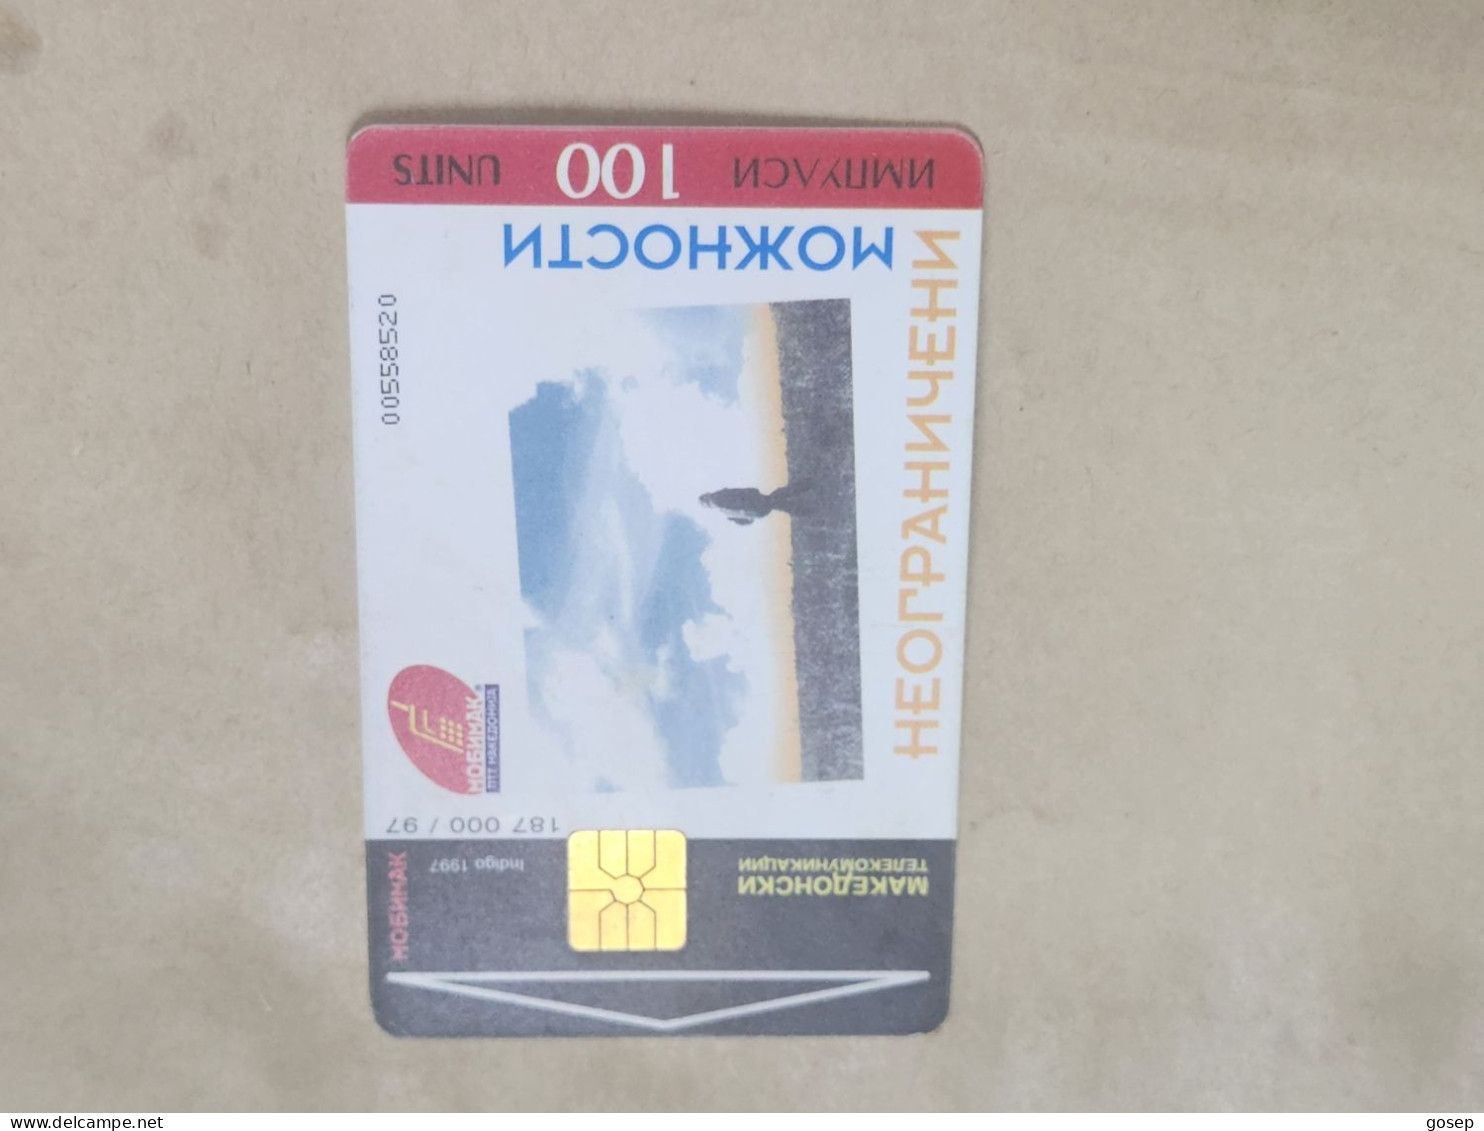 Macedonia-(MK-PTT-0007B)Mobimak Instructions (28)(4/97)(100units)(00558520)-tirage-187.000-used Card+1card Prepiad Free - Macedonia Del Norte